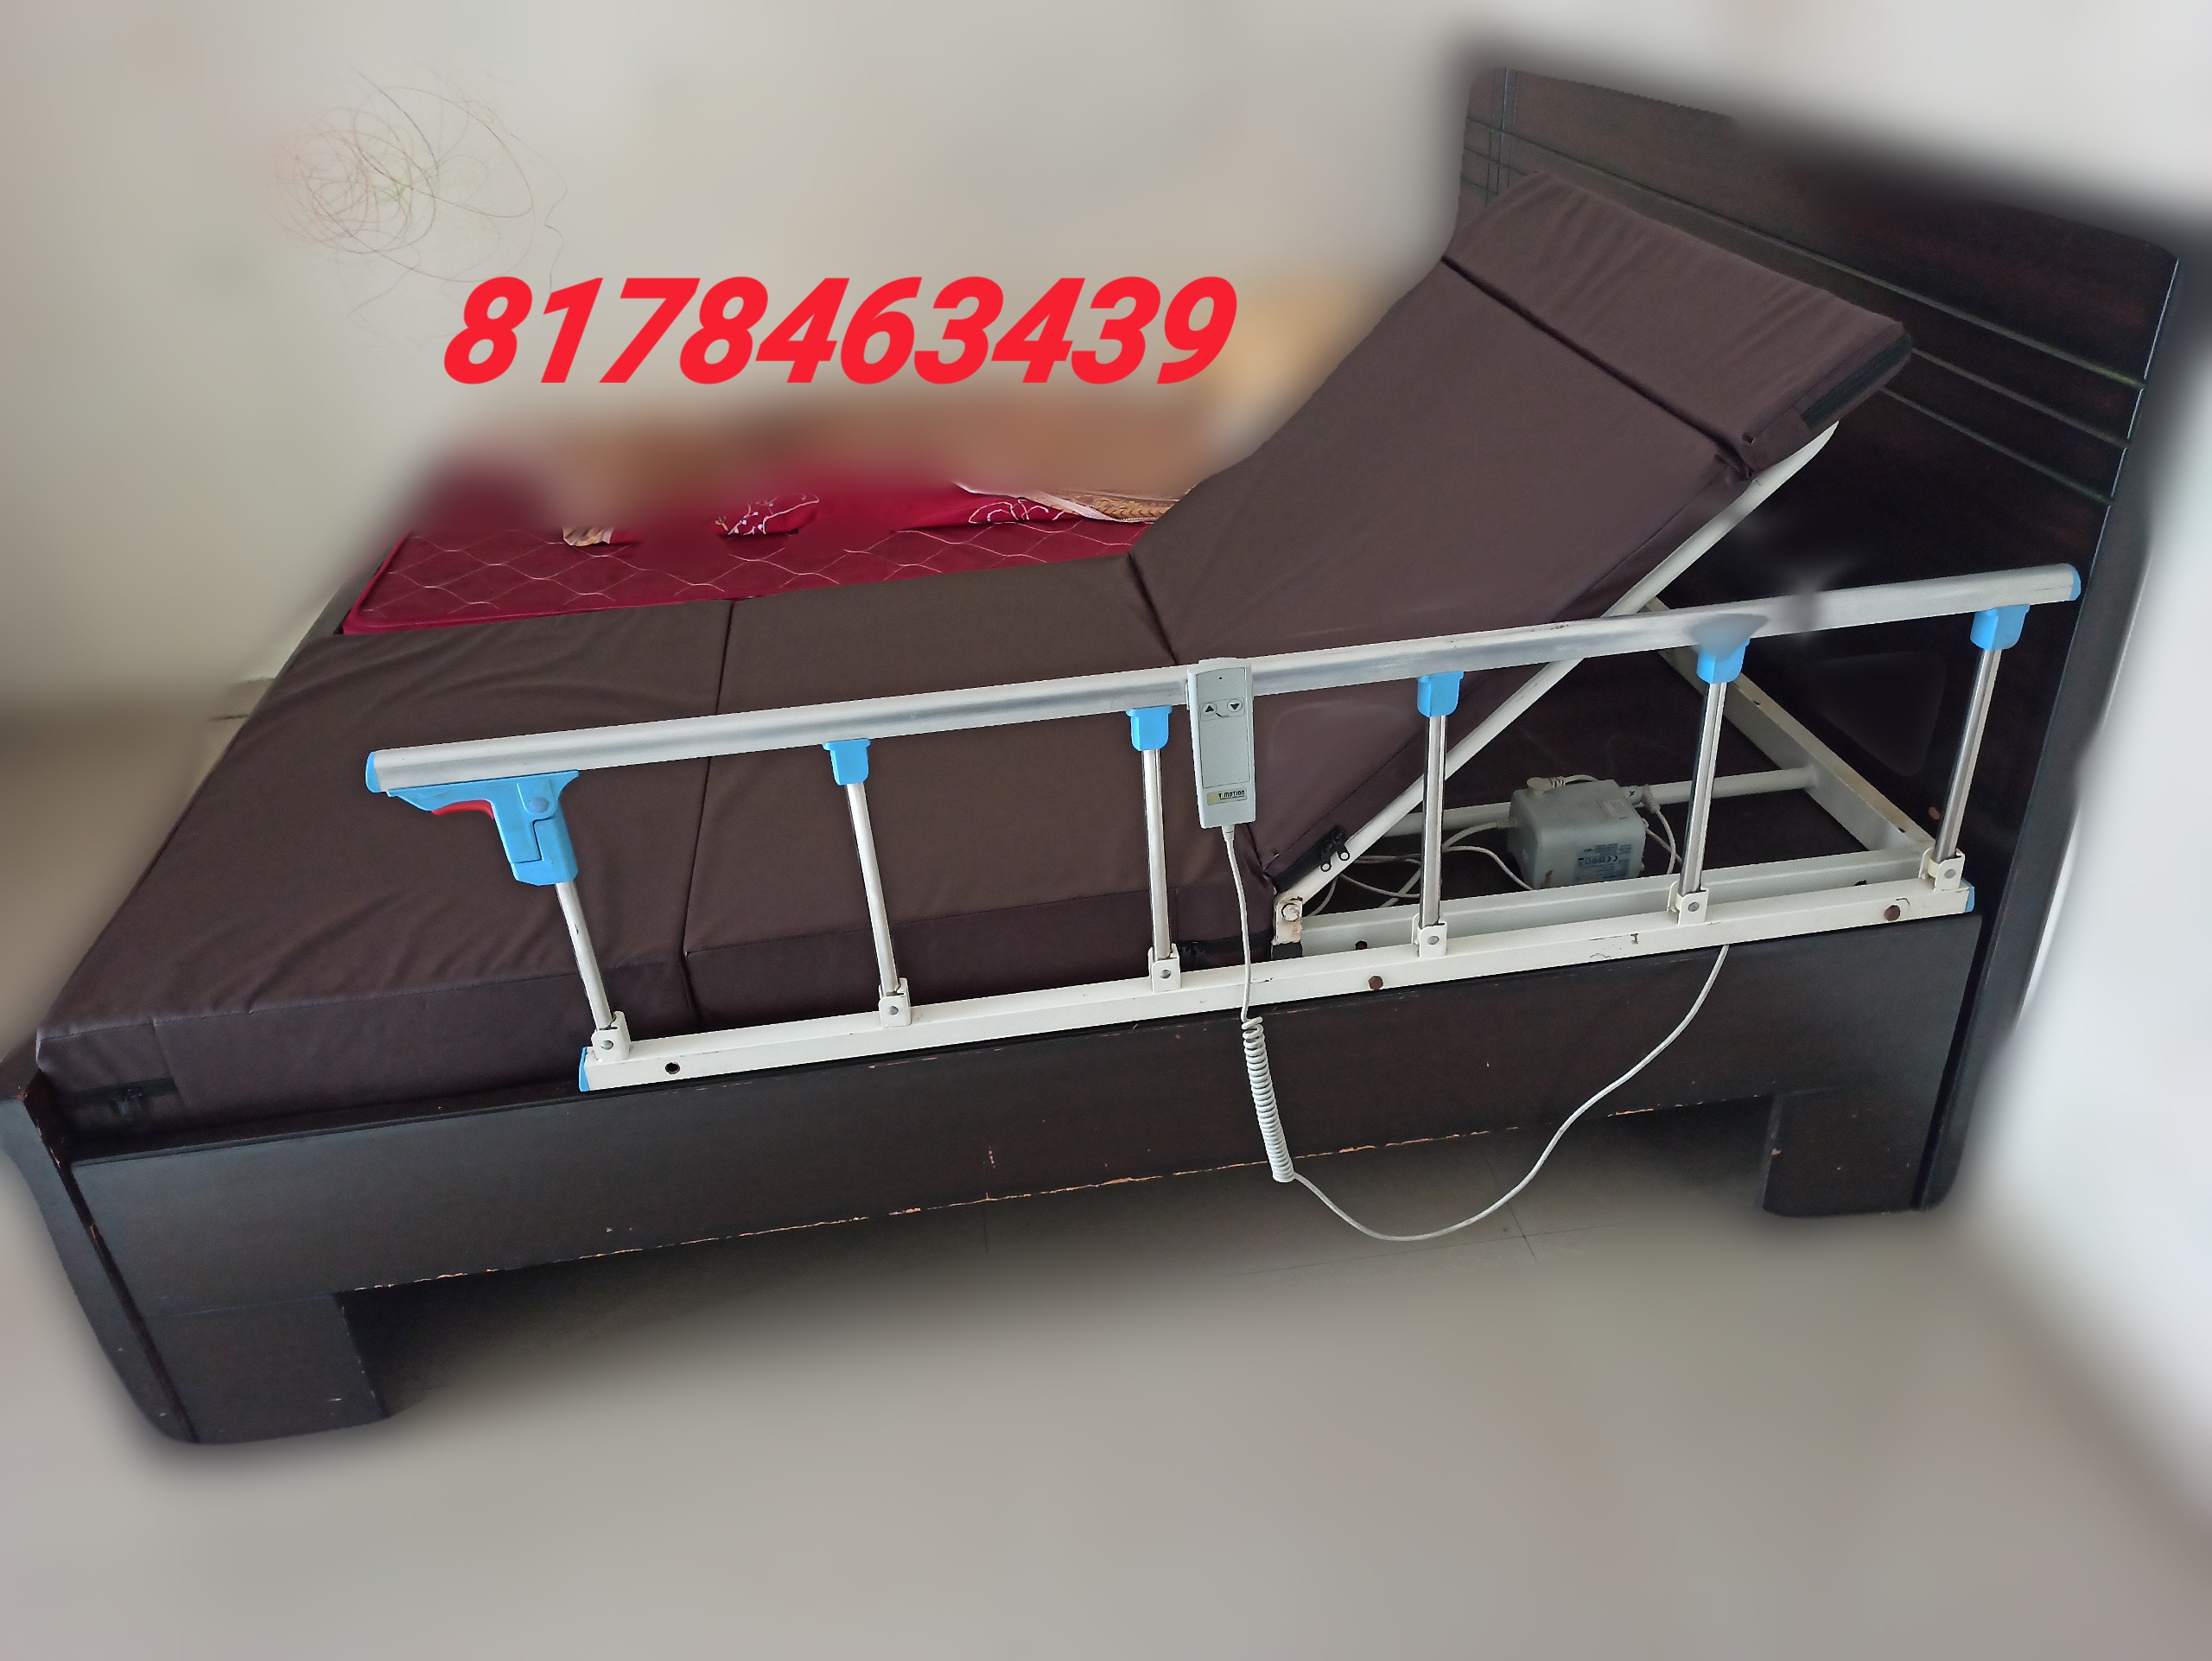 Hospital Bed On Rent New Delhi Greater Noida Ncr 8178463439